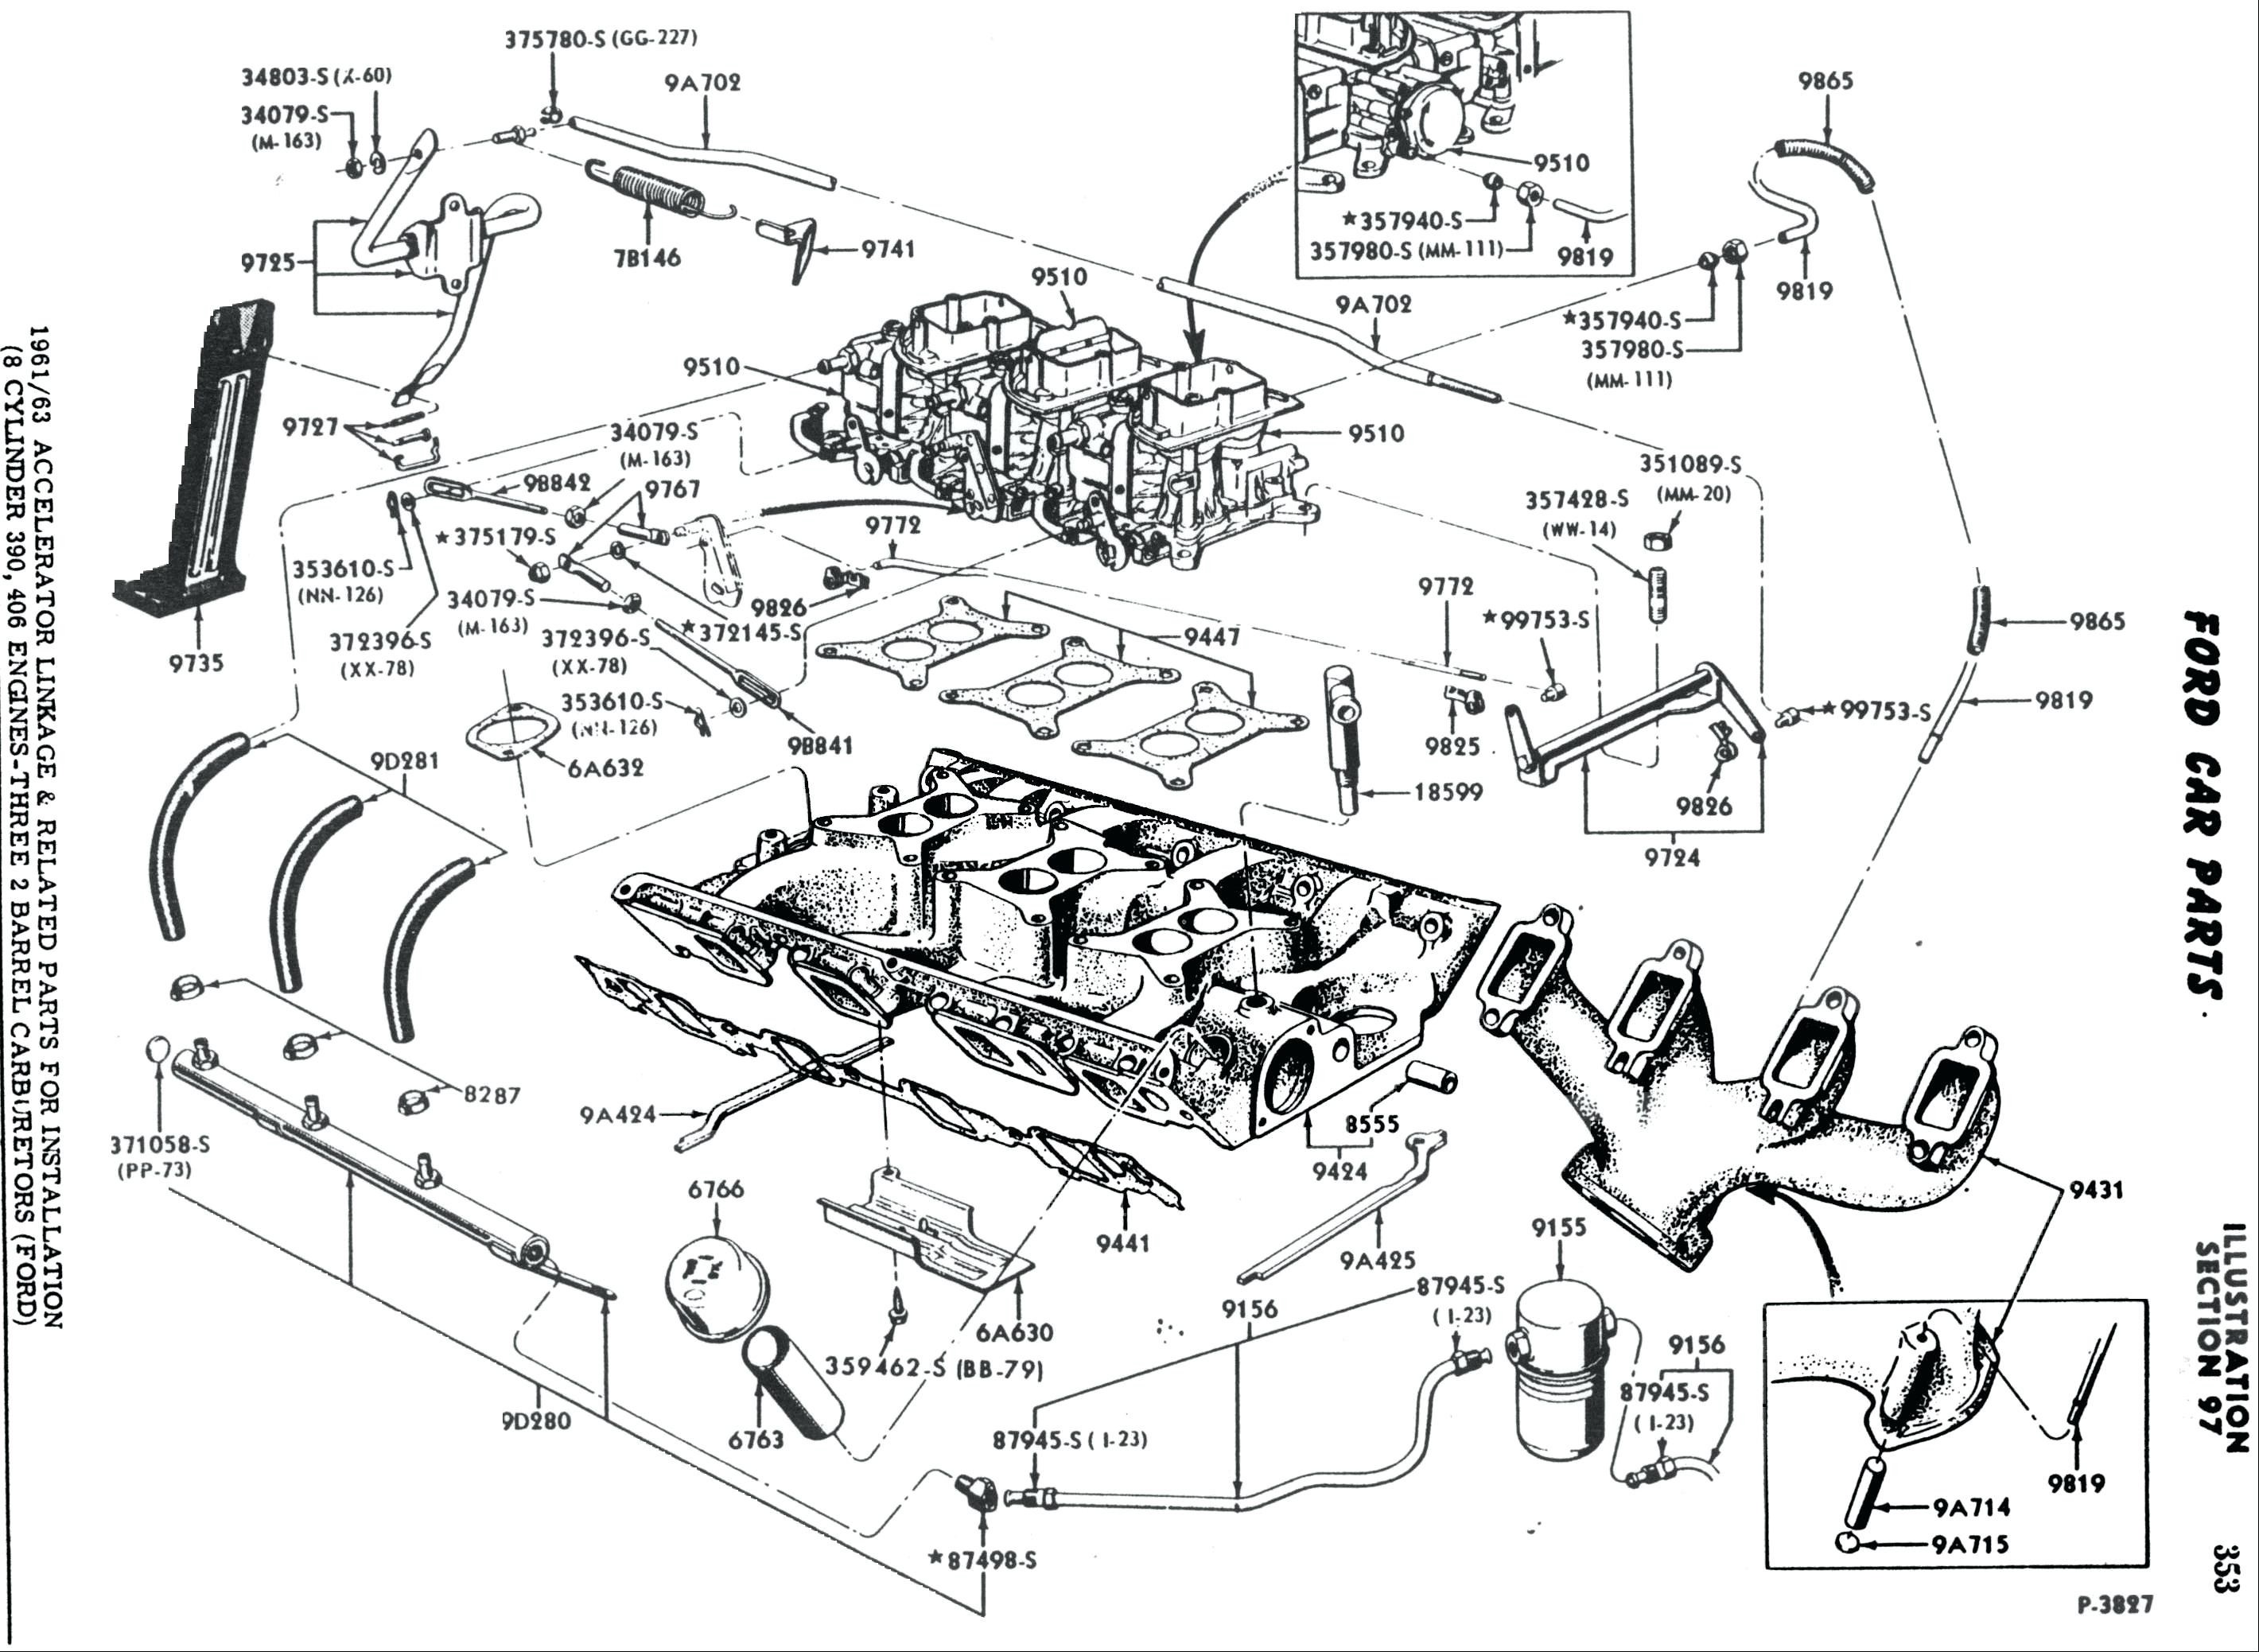 Diagram Of Car Engine How It Works Wrg 7679] Car Engine Schematics Of Diagram Of Car Engine How It Works